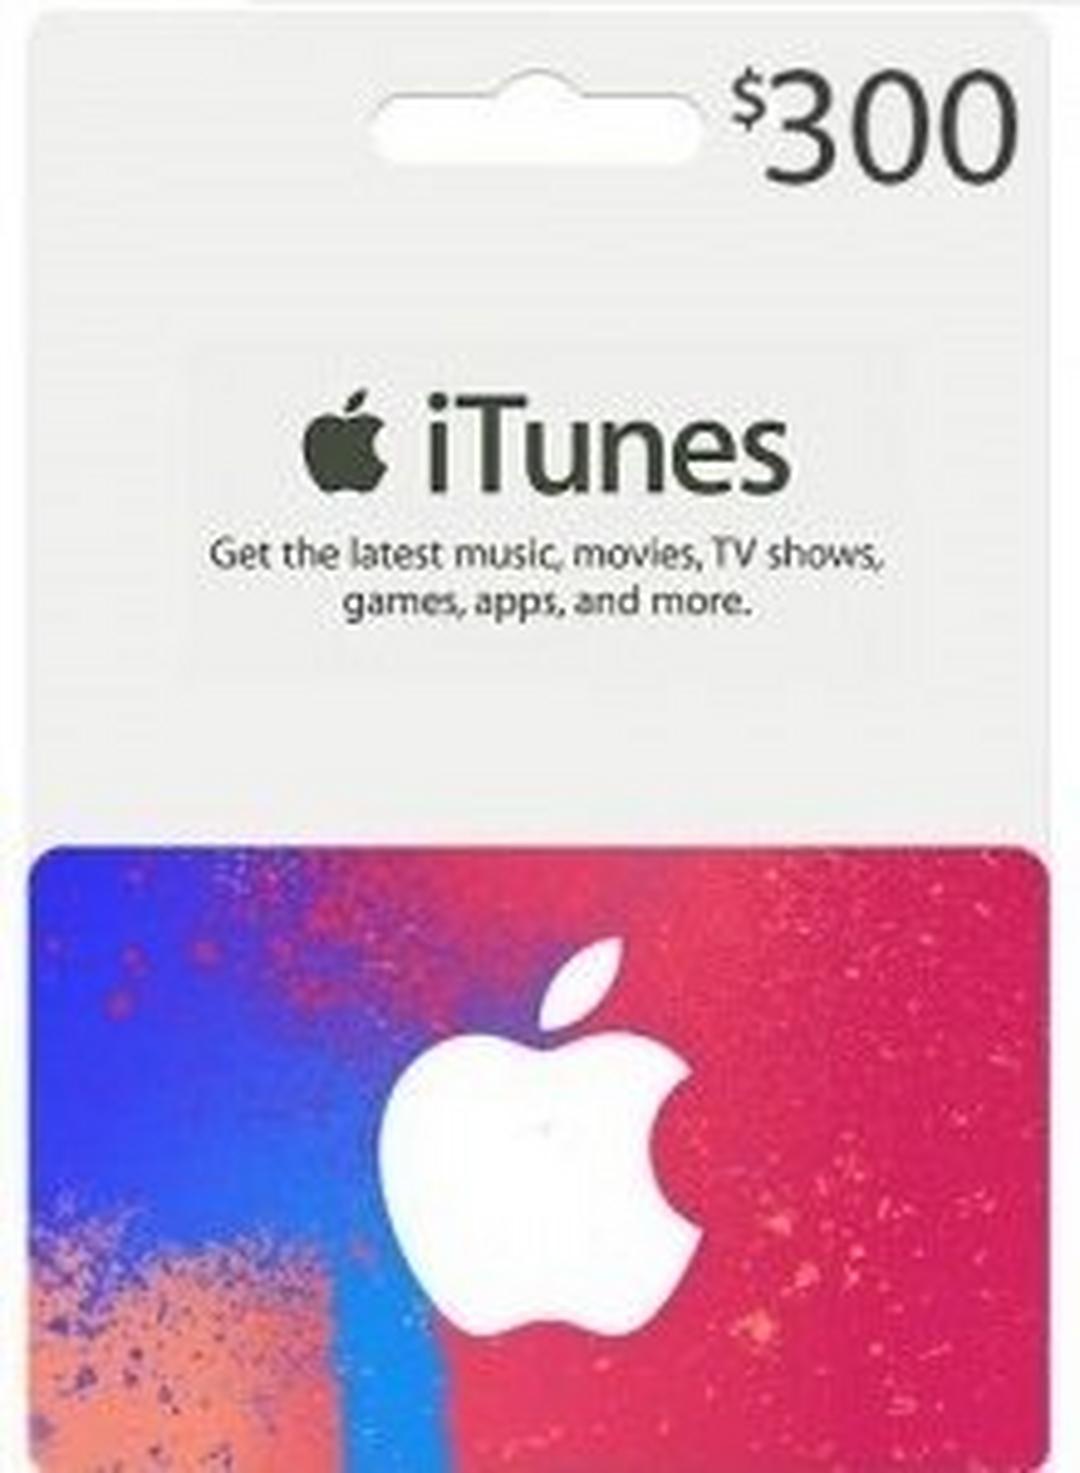 Apple iTunes Gift Card $300 (U.S. Account)